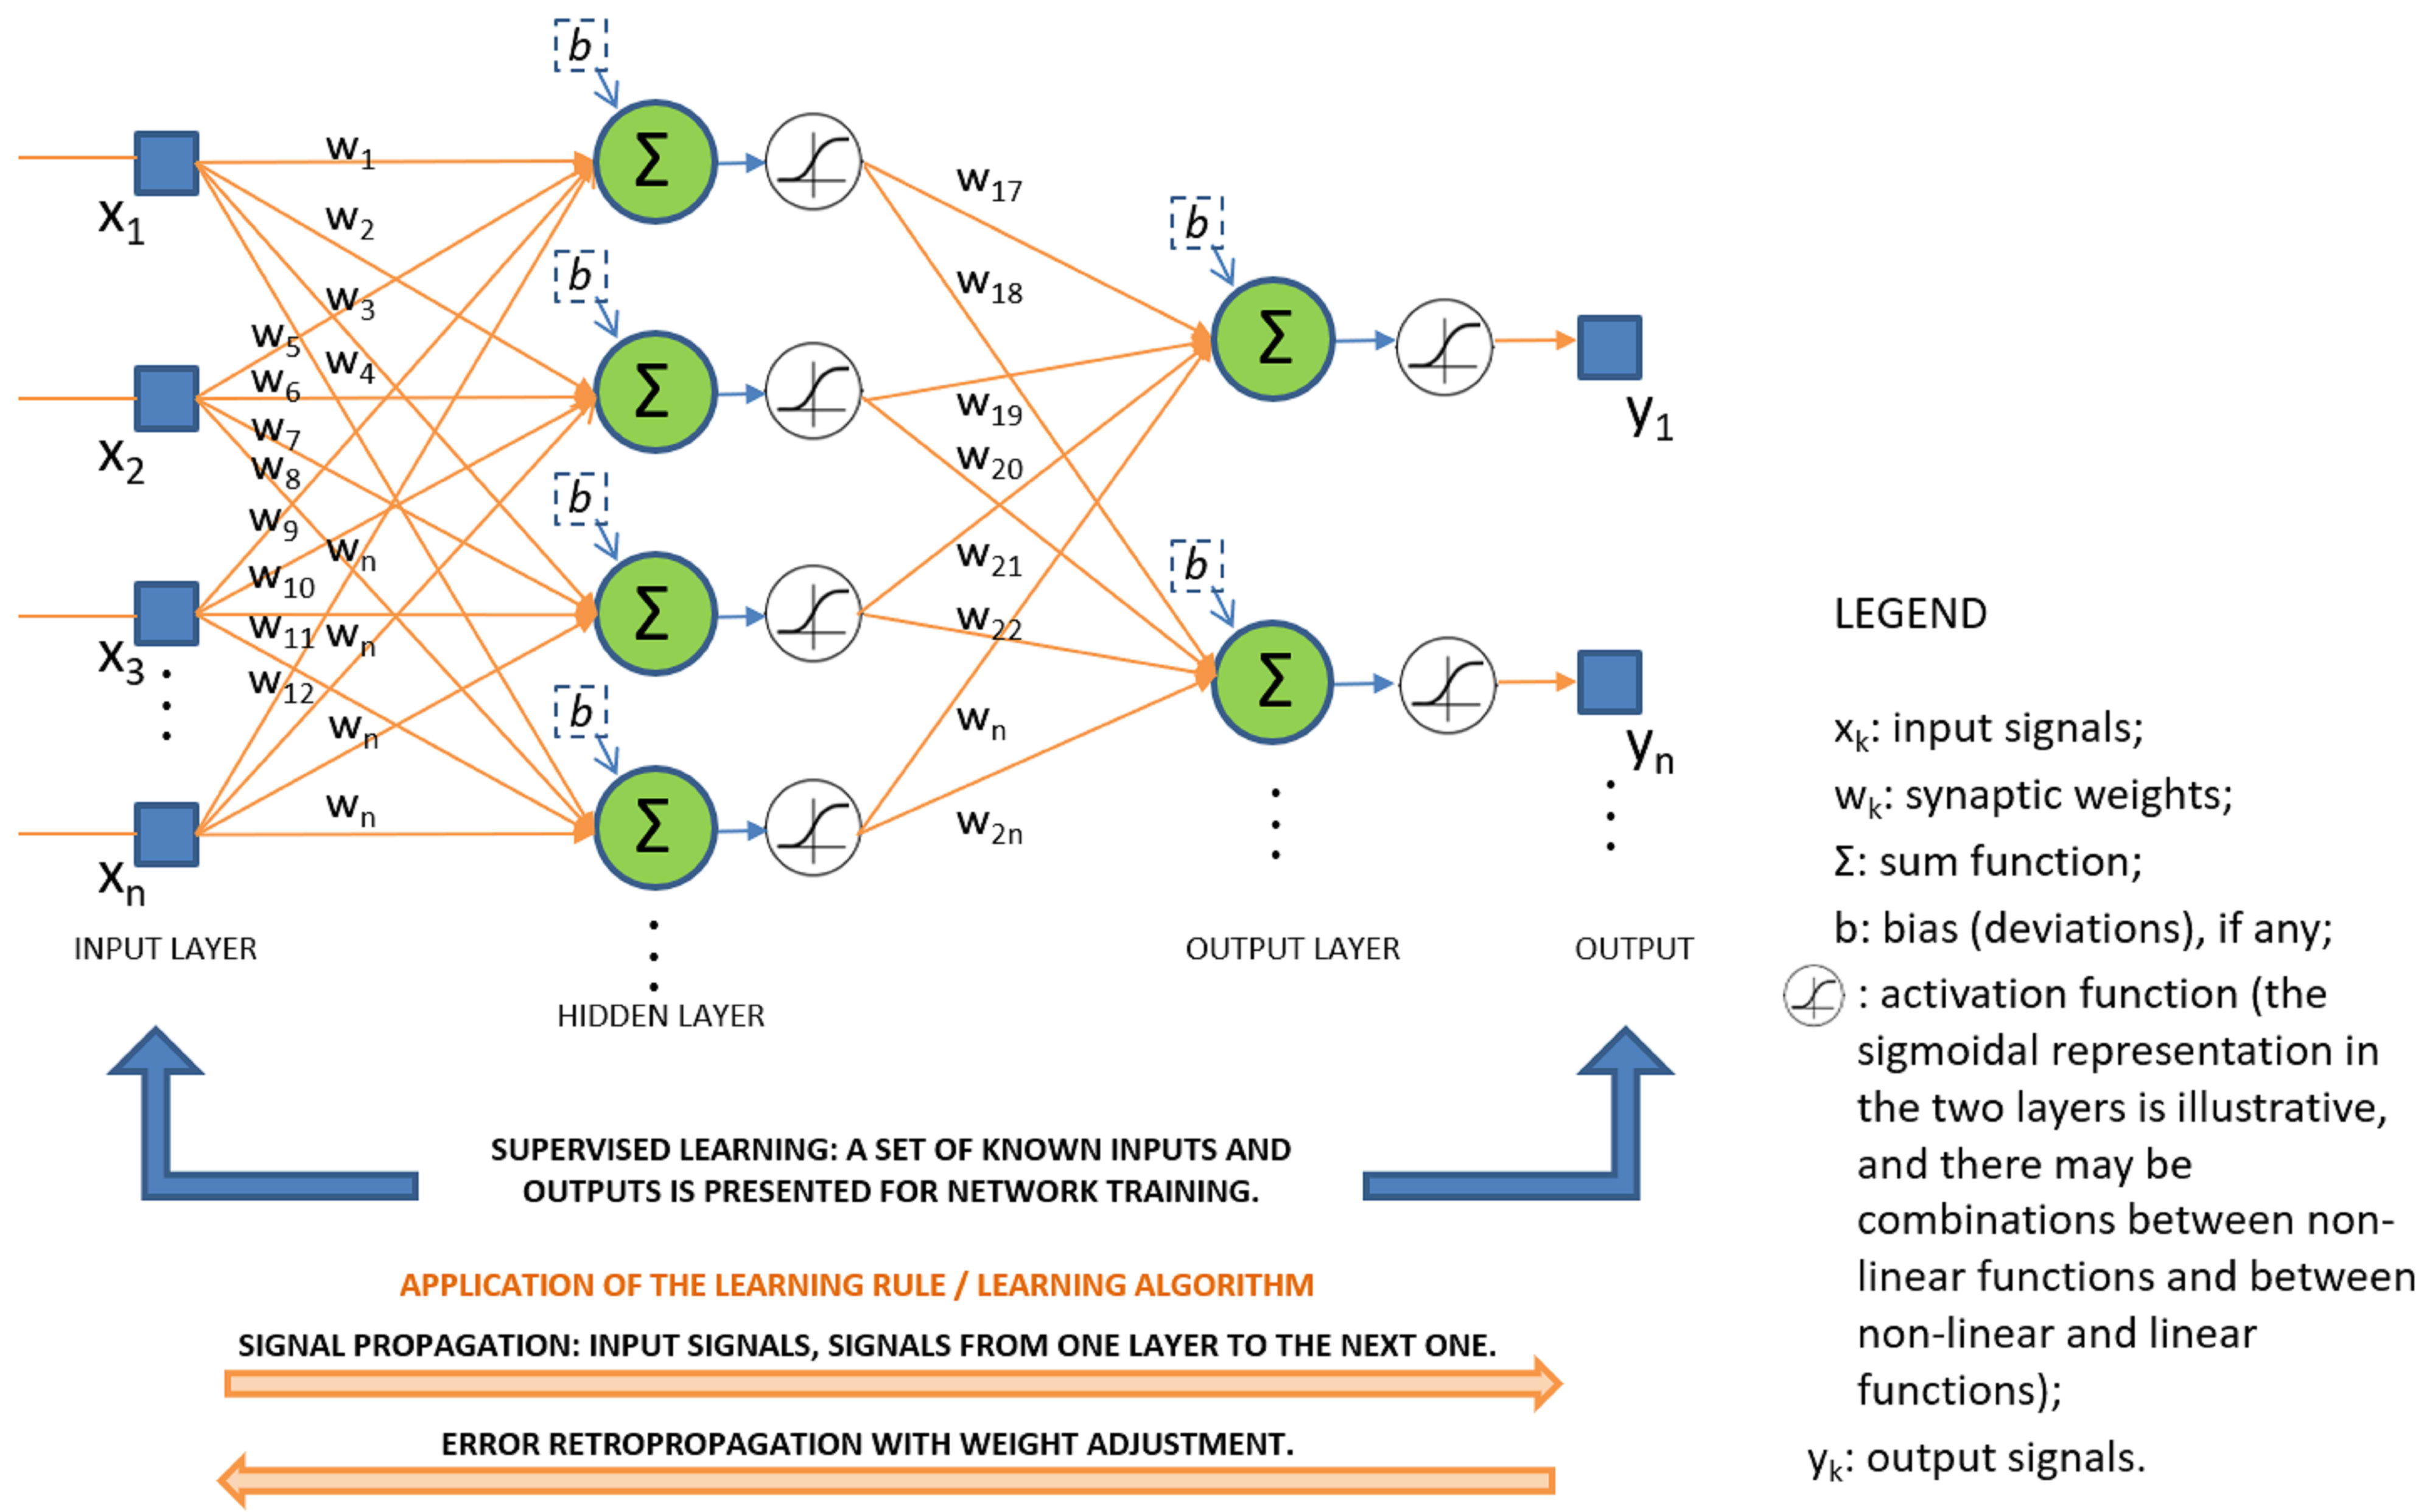 Multilayer perceptron neural network: error backpropagation algorithm.